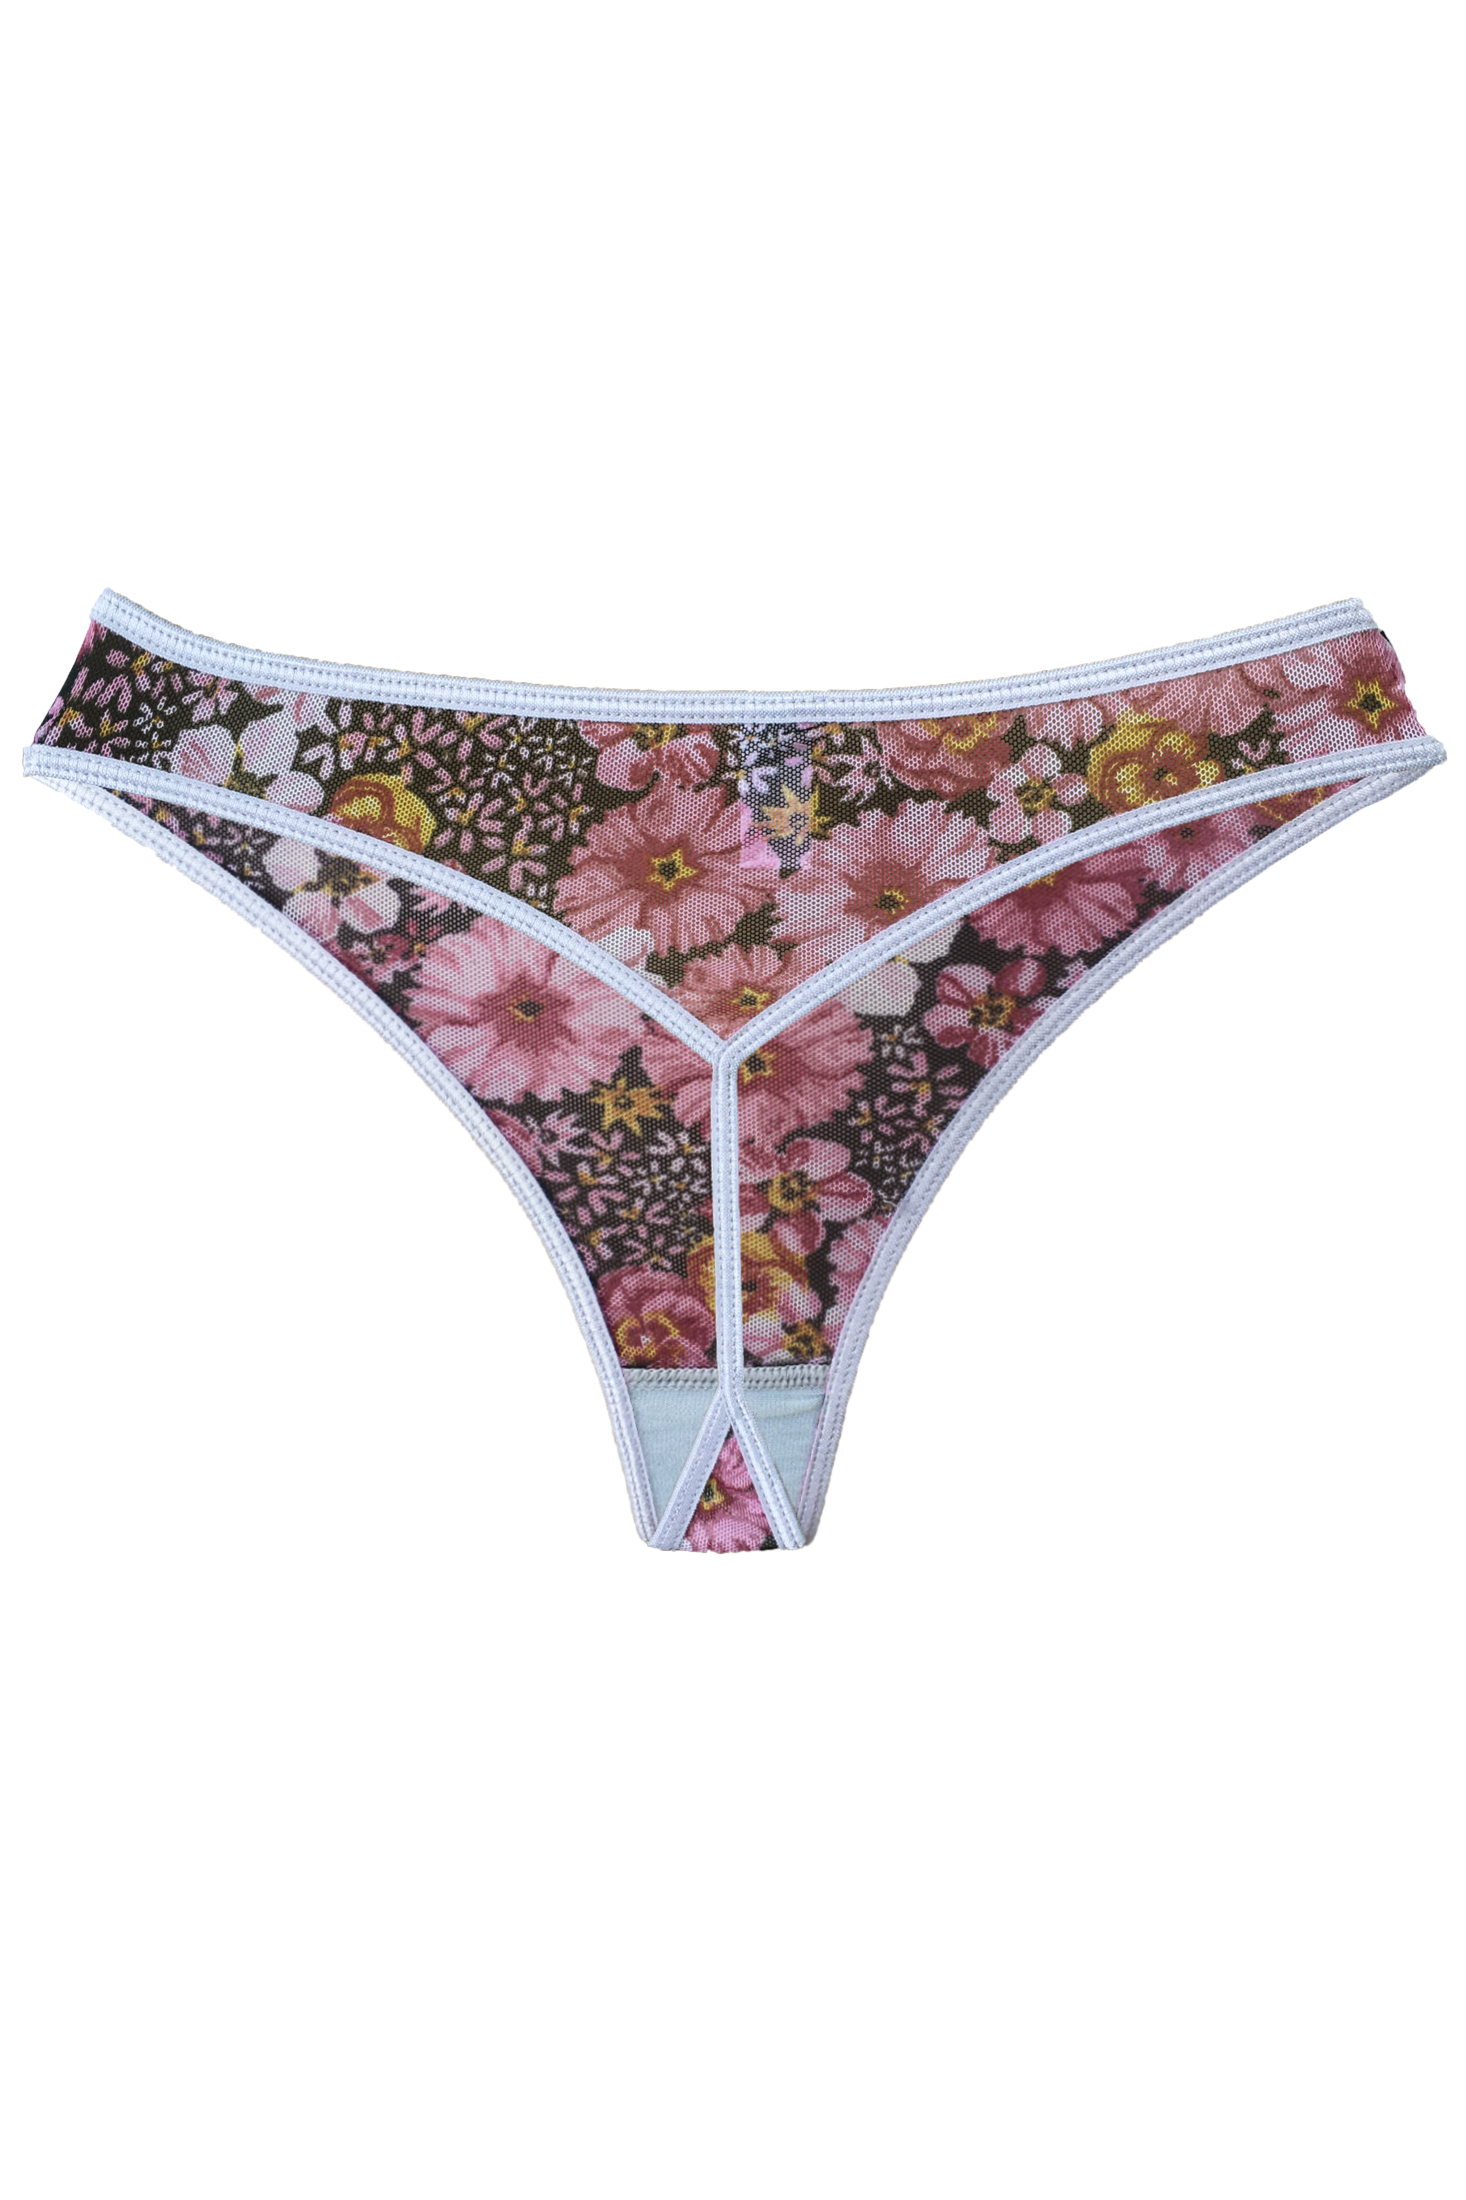 Lingerie Letters Spring Thong - Women's Underwear Online